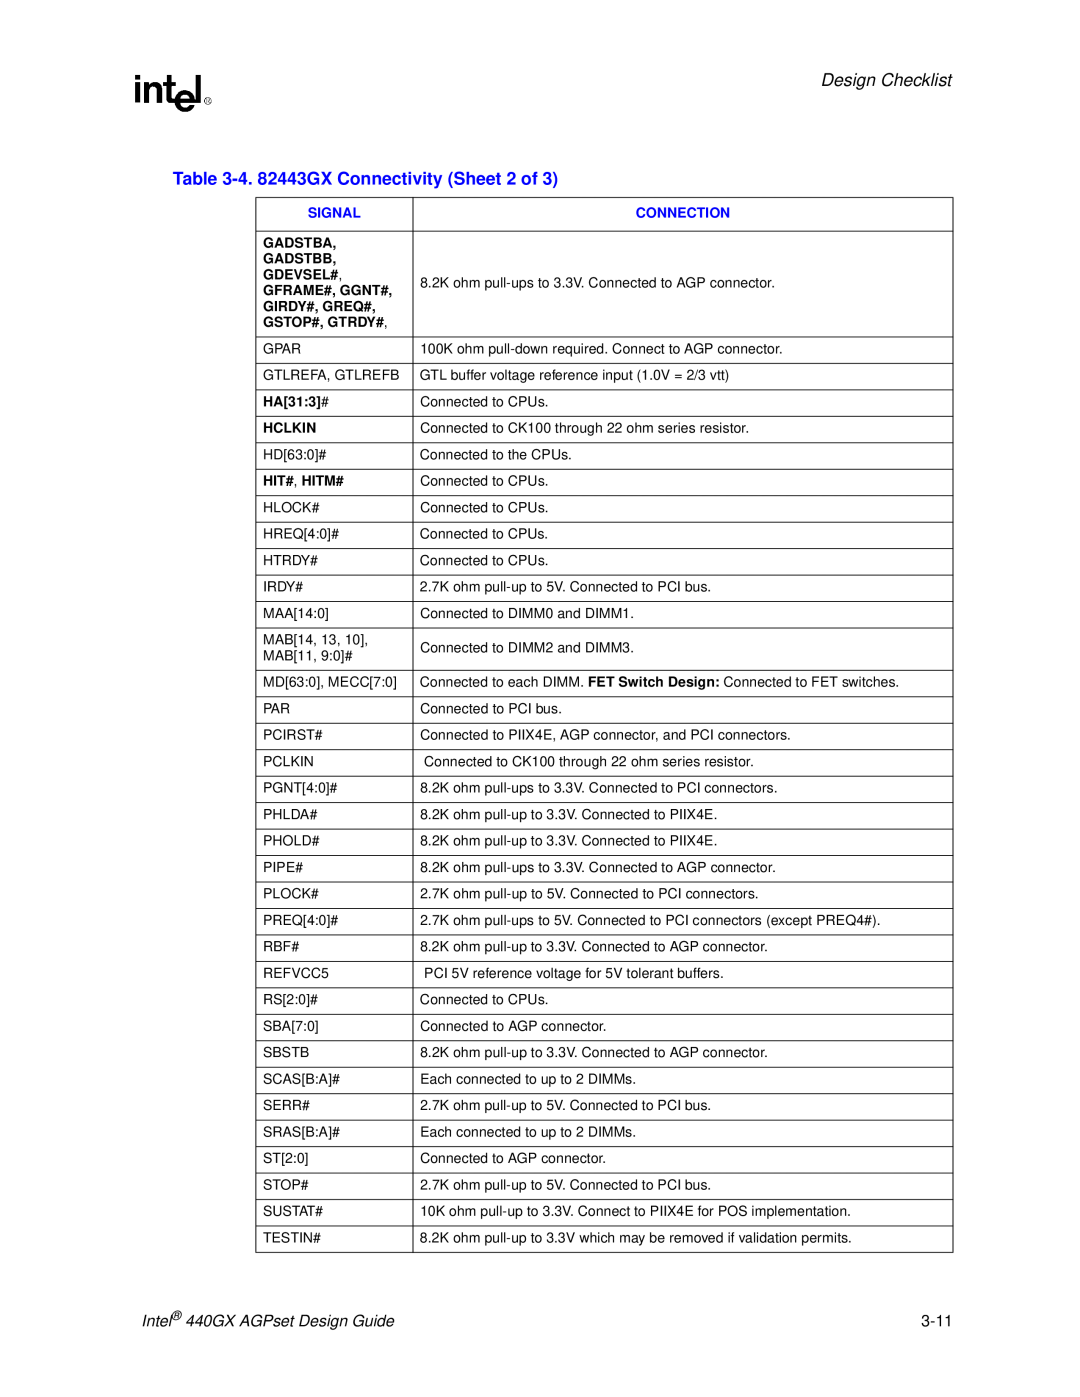 Intel 4. 82443GX Connectivity Sheet 2 of, Design Checklist, Intel440GX AGPset Design Guide, 3-11, Gadstba, Gadstbb 